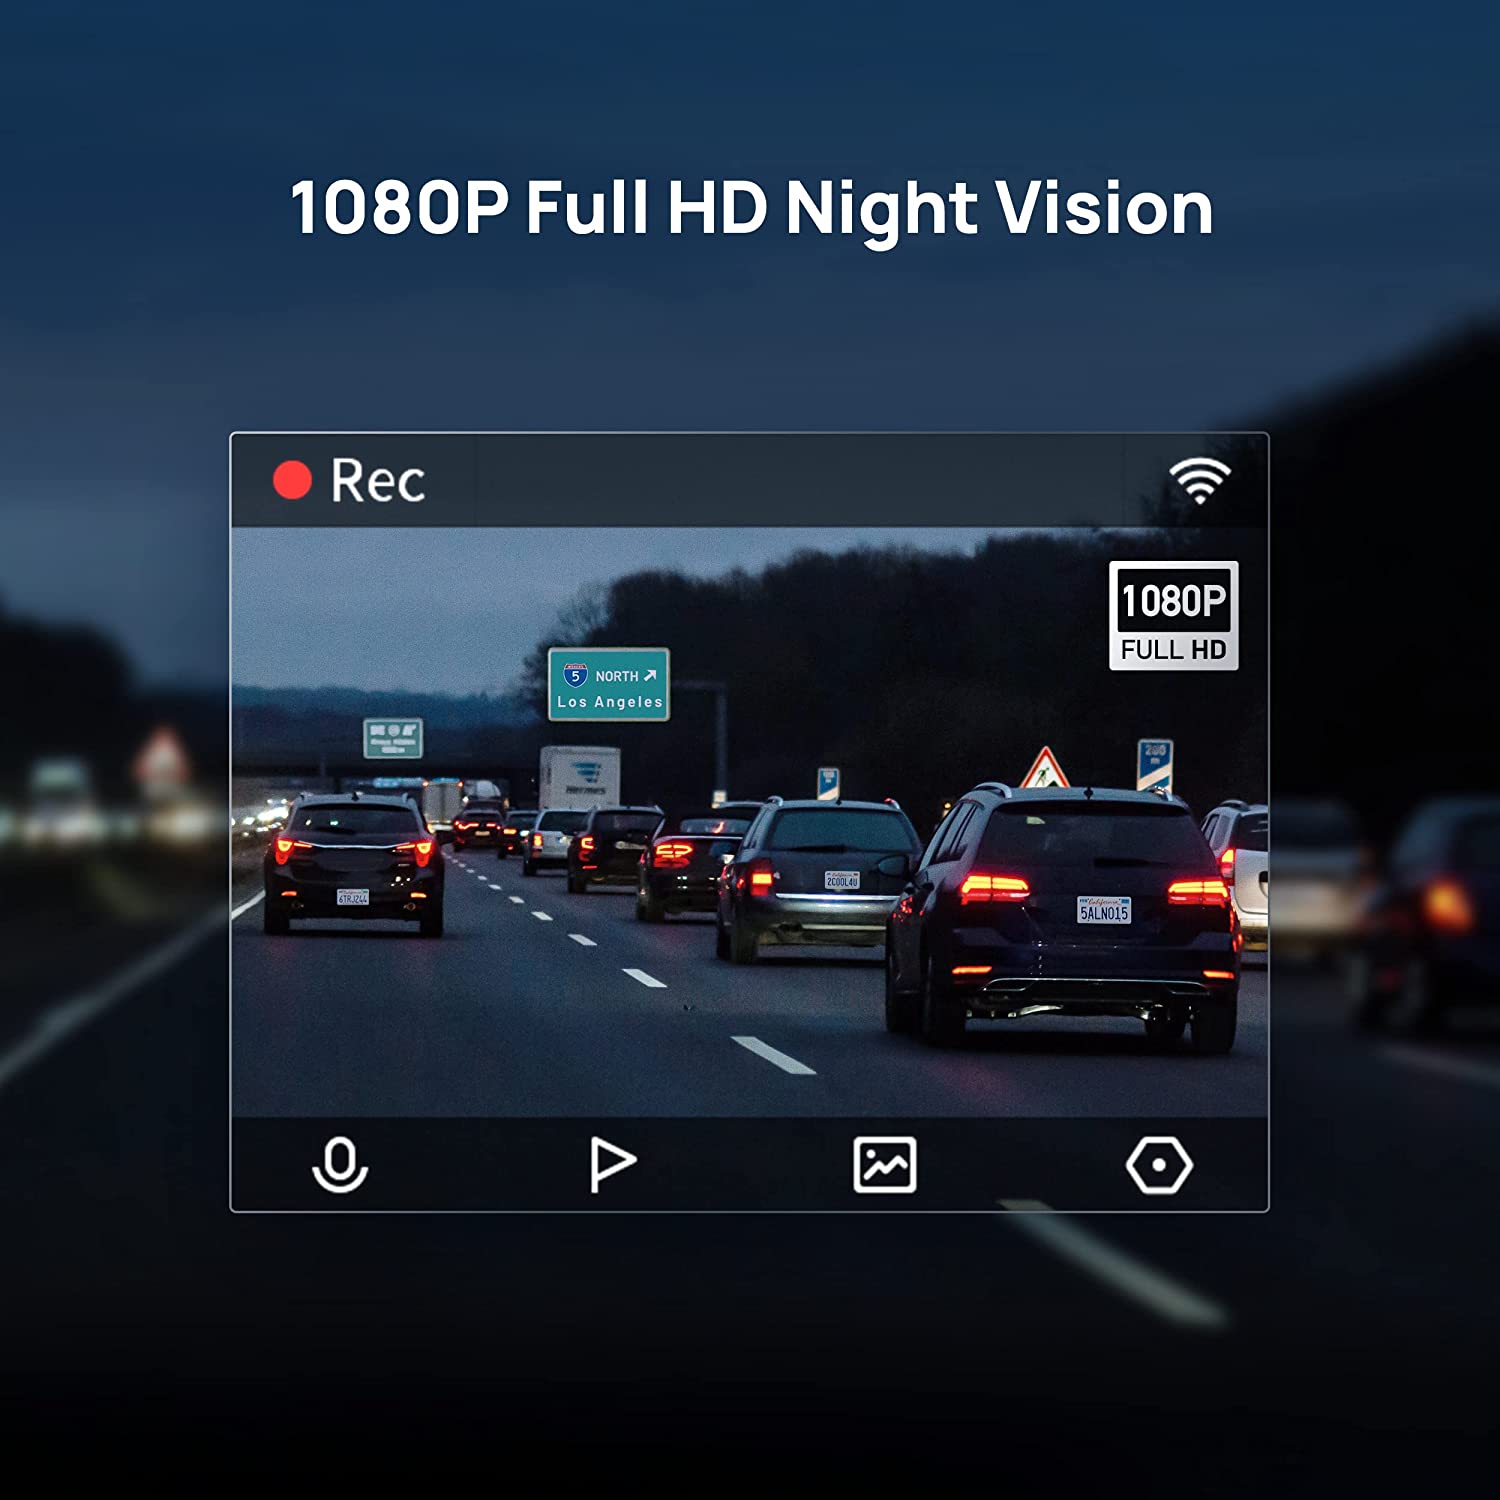 70mai M300 2021 New Dashcam Dash Cam Midrive M300 Car DVR 1296P QHD Night  Vision Cam Recorder 24H Mode WIFI & App Control M300